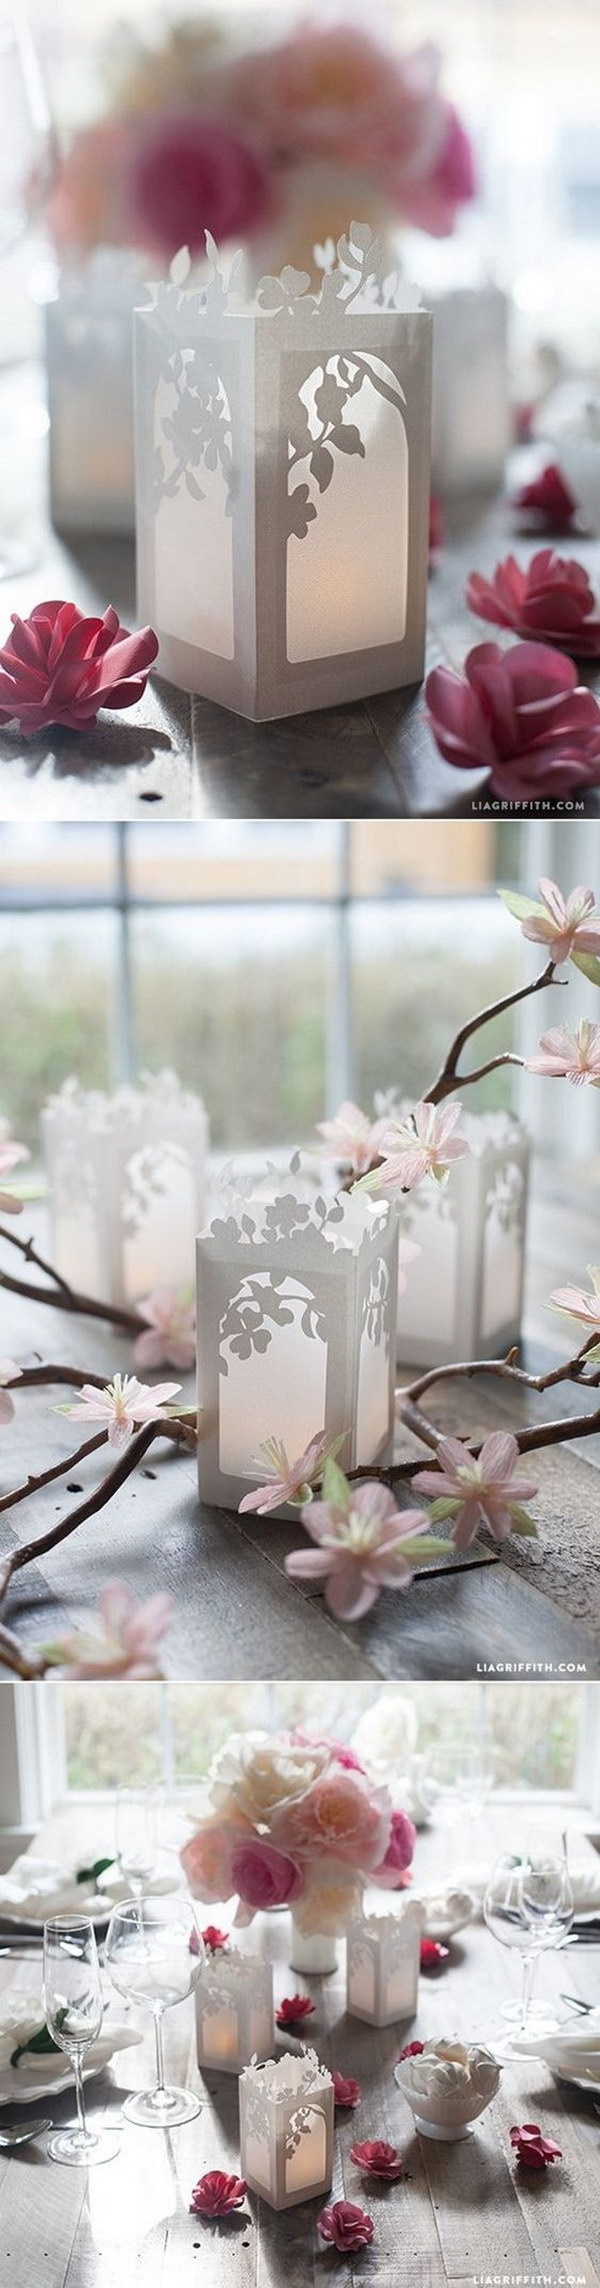 DIY Paper Lanterns Wedding Centerpieces 